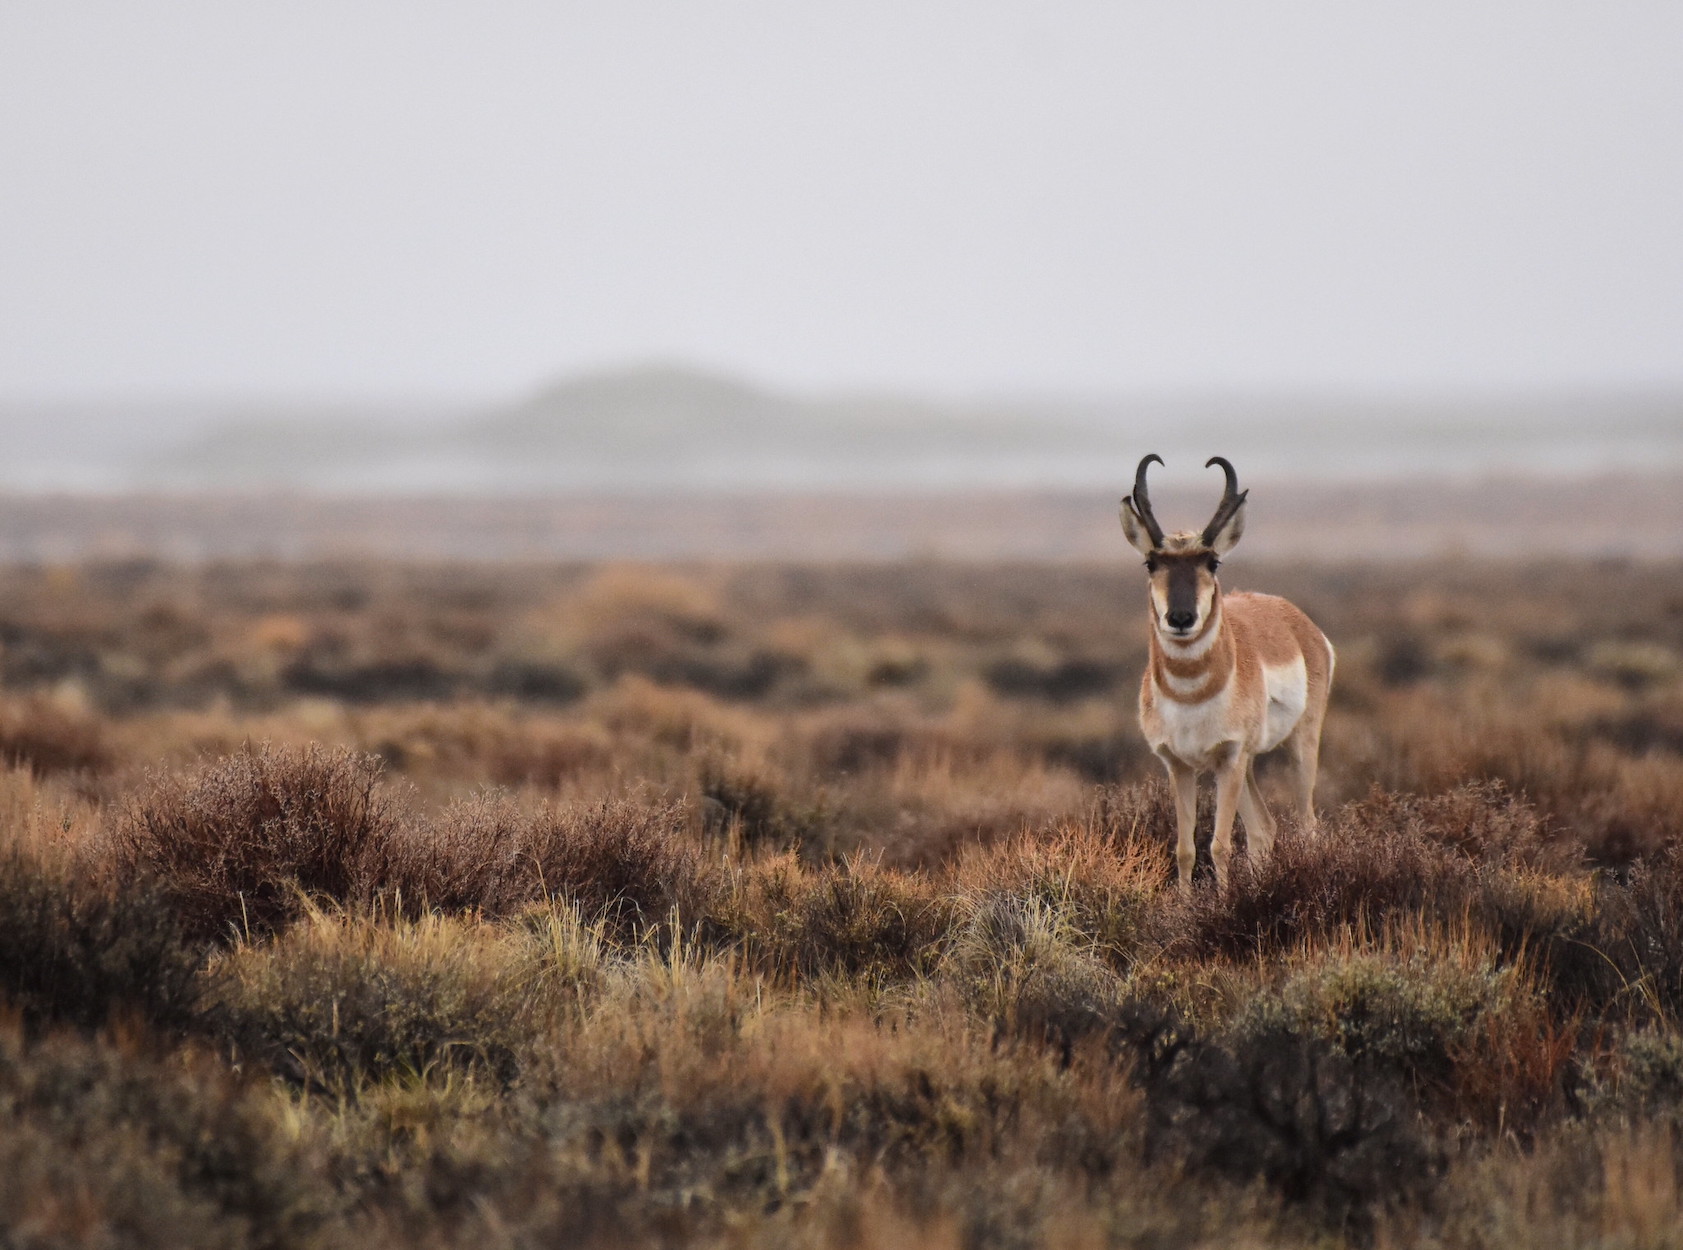 A pronghorn antelope at a national wildlife refuge.